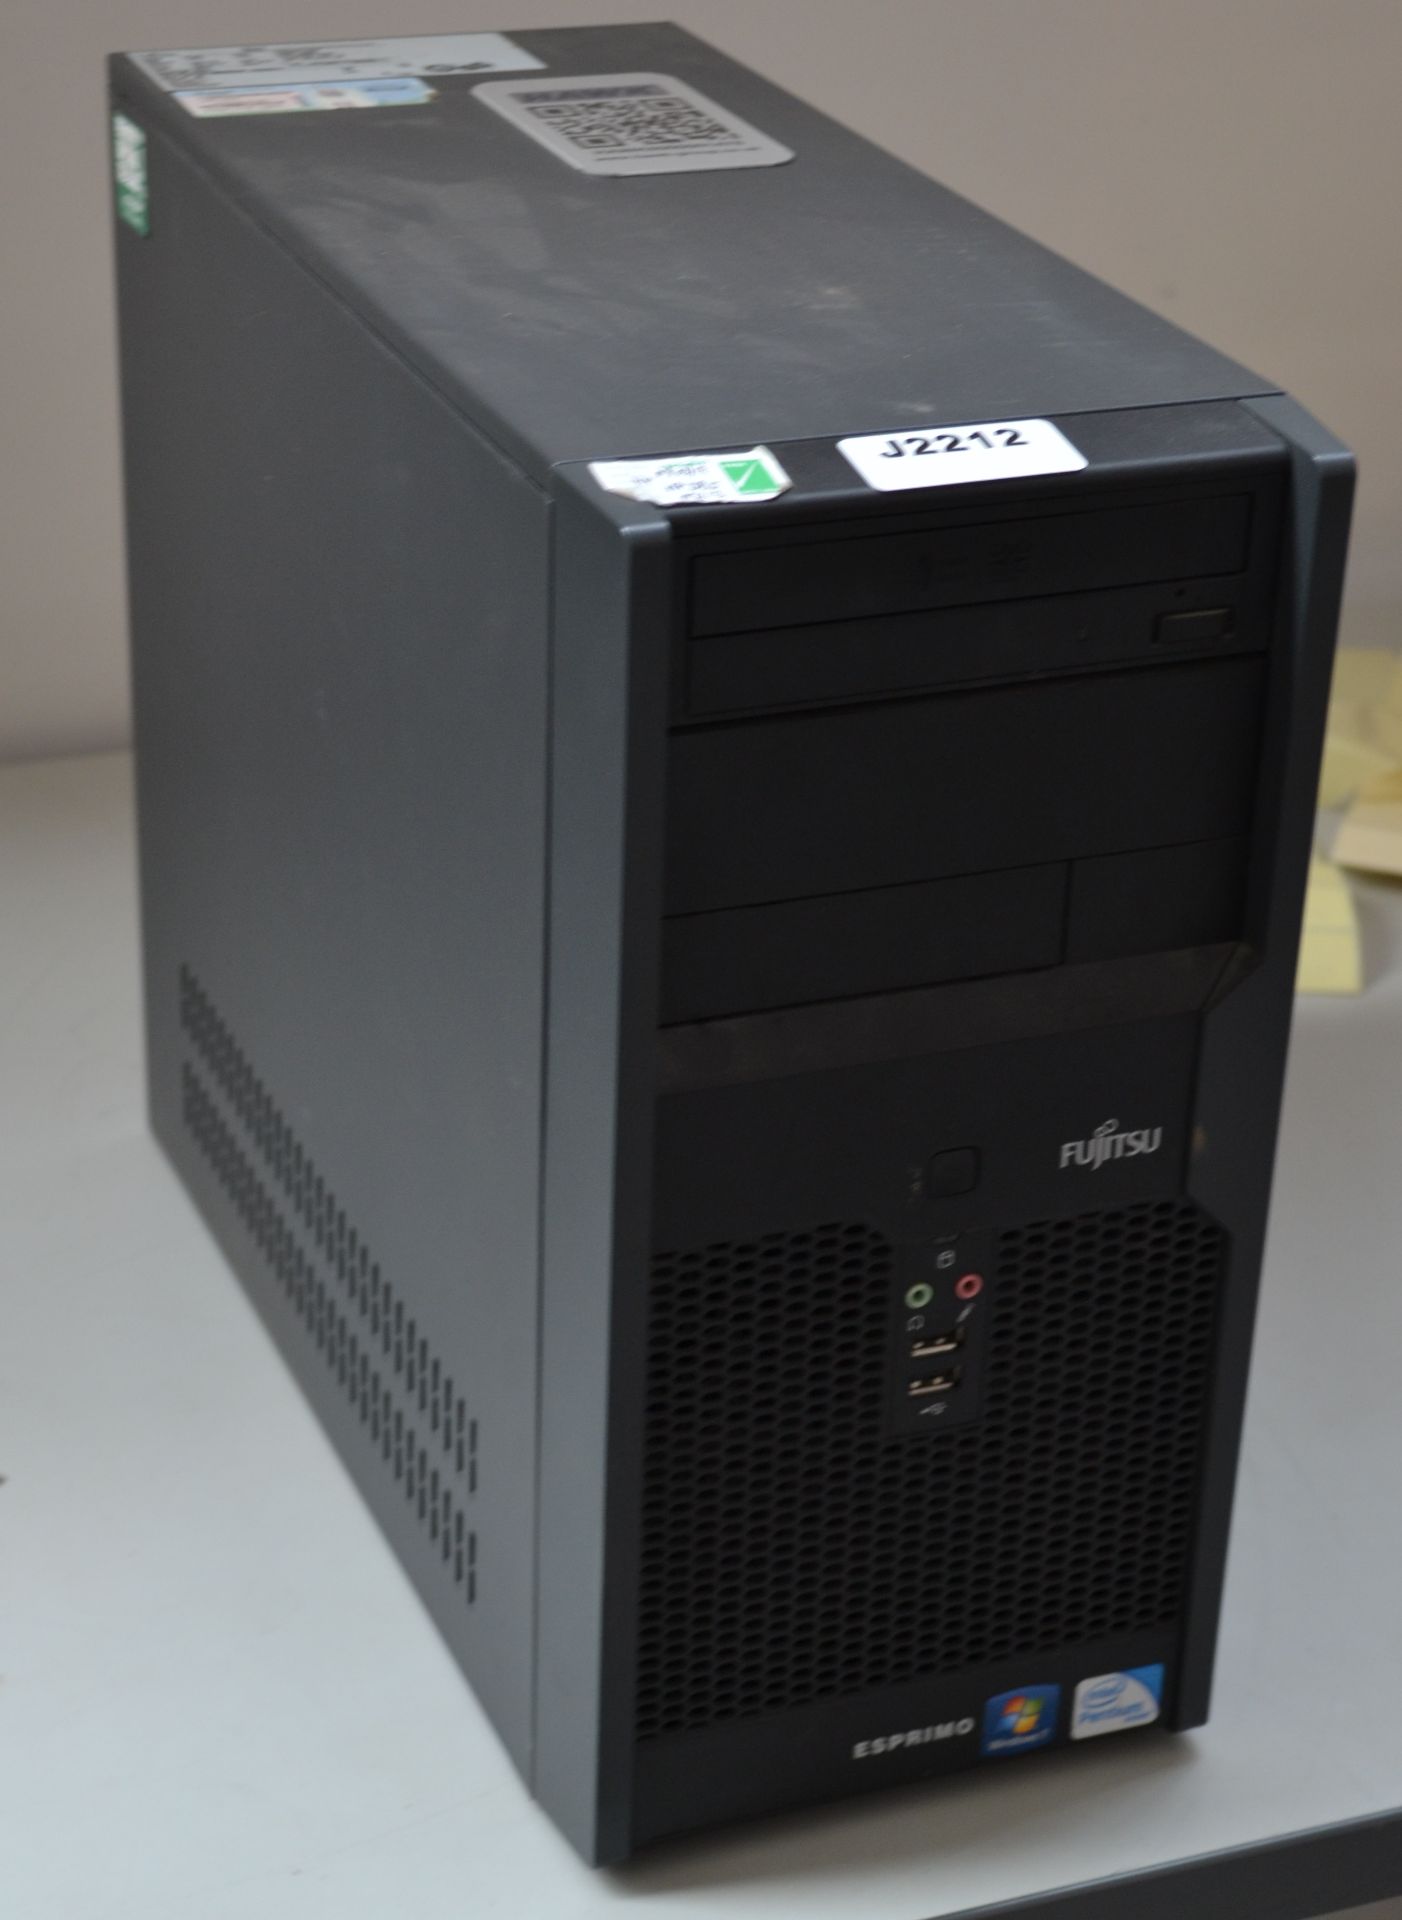 1 x Fujitsu Esprimo P2560 Desktop Computer - Features Intel Pentium 3.20ghz Processor and 4gb DDR3 - Image 2 of 3